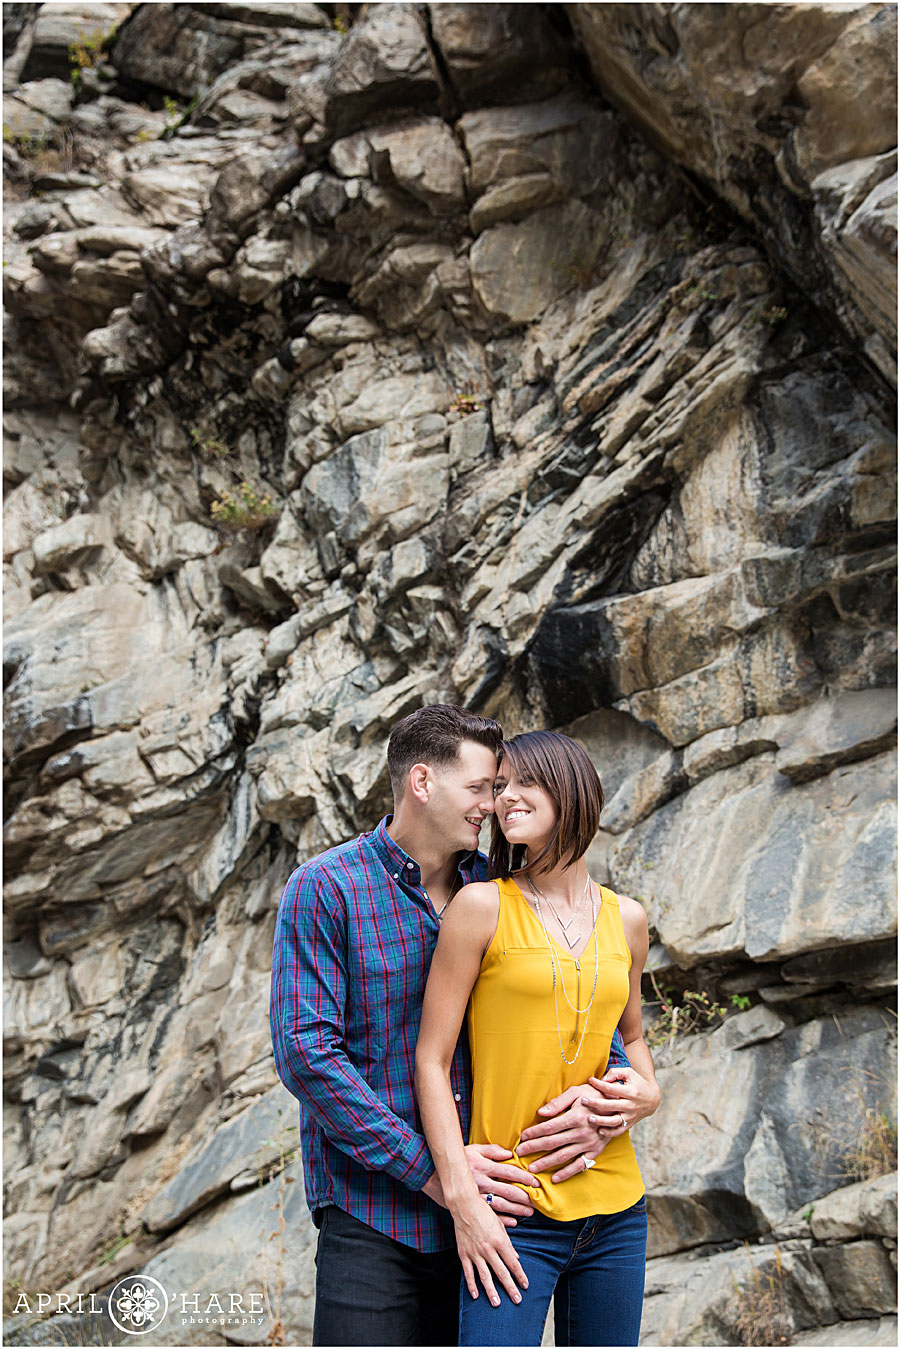 Beautiful engagement photos in a popular rock climbing area Clear Creek Canyon